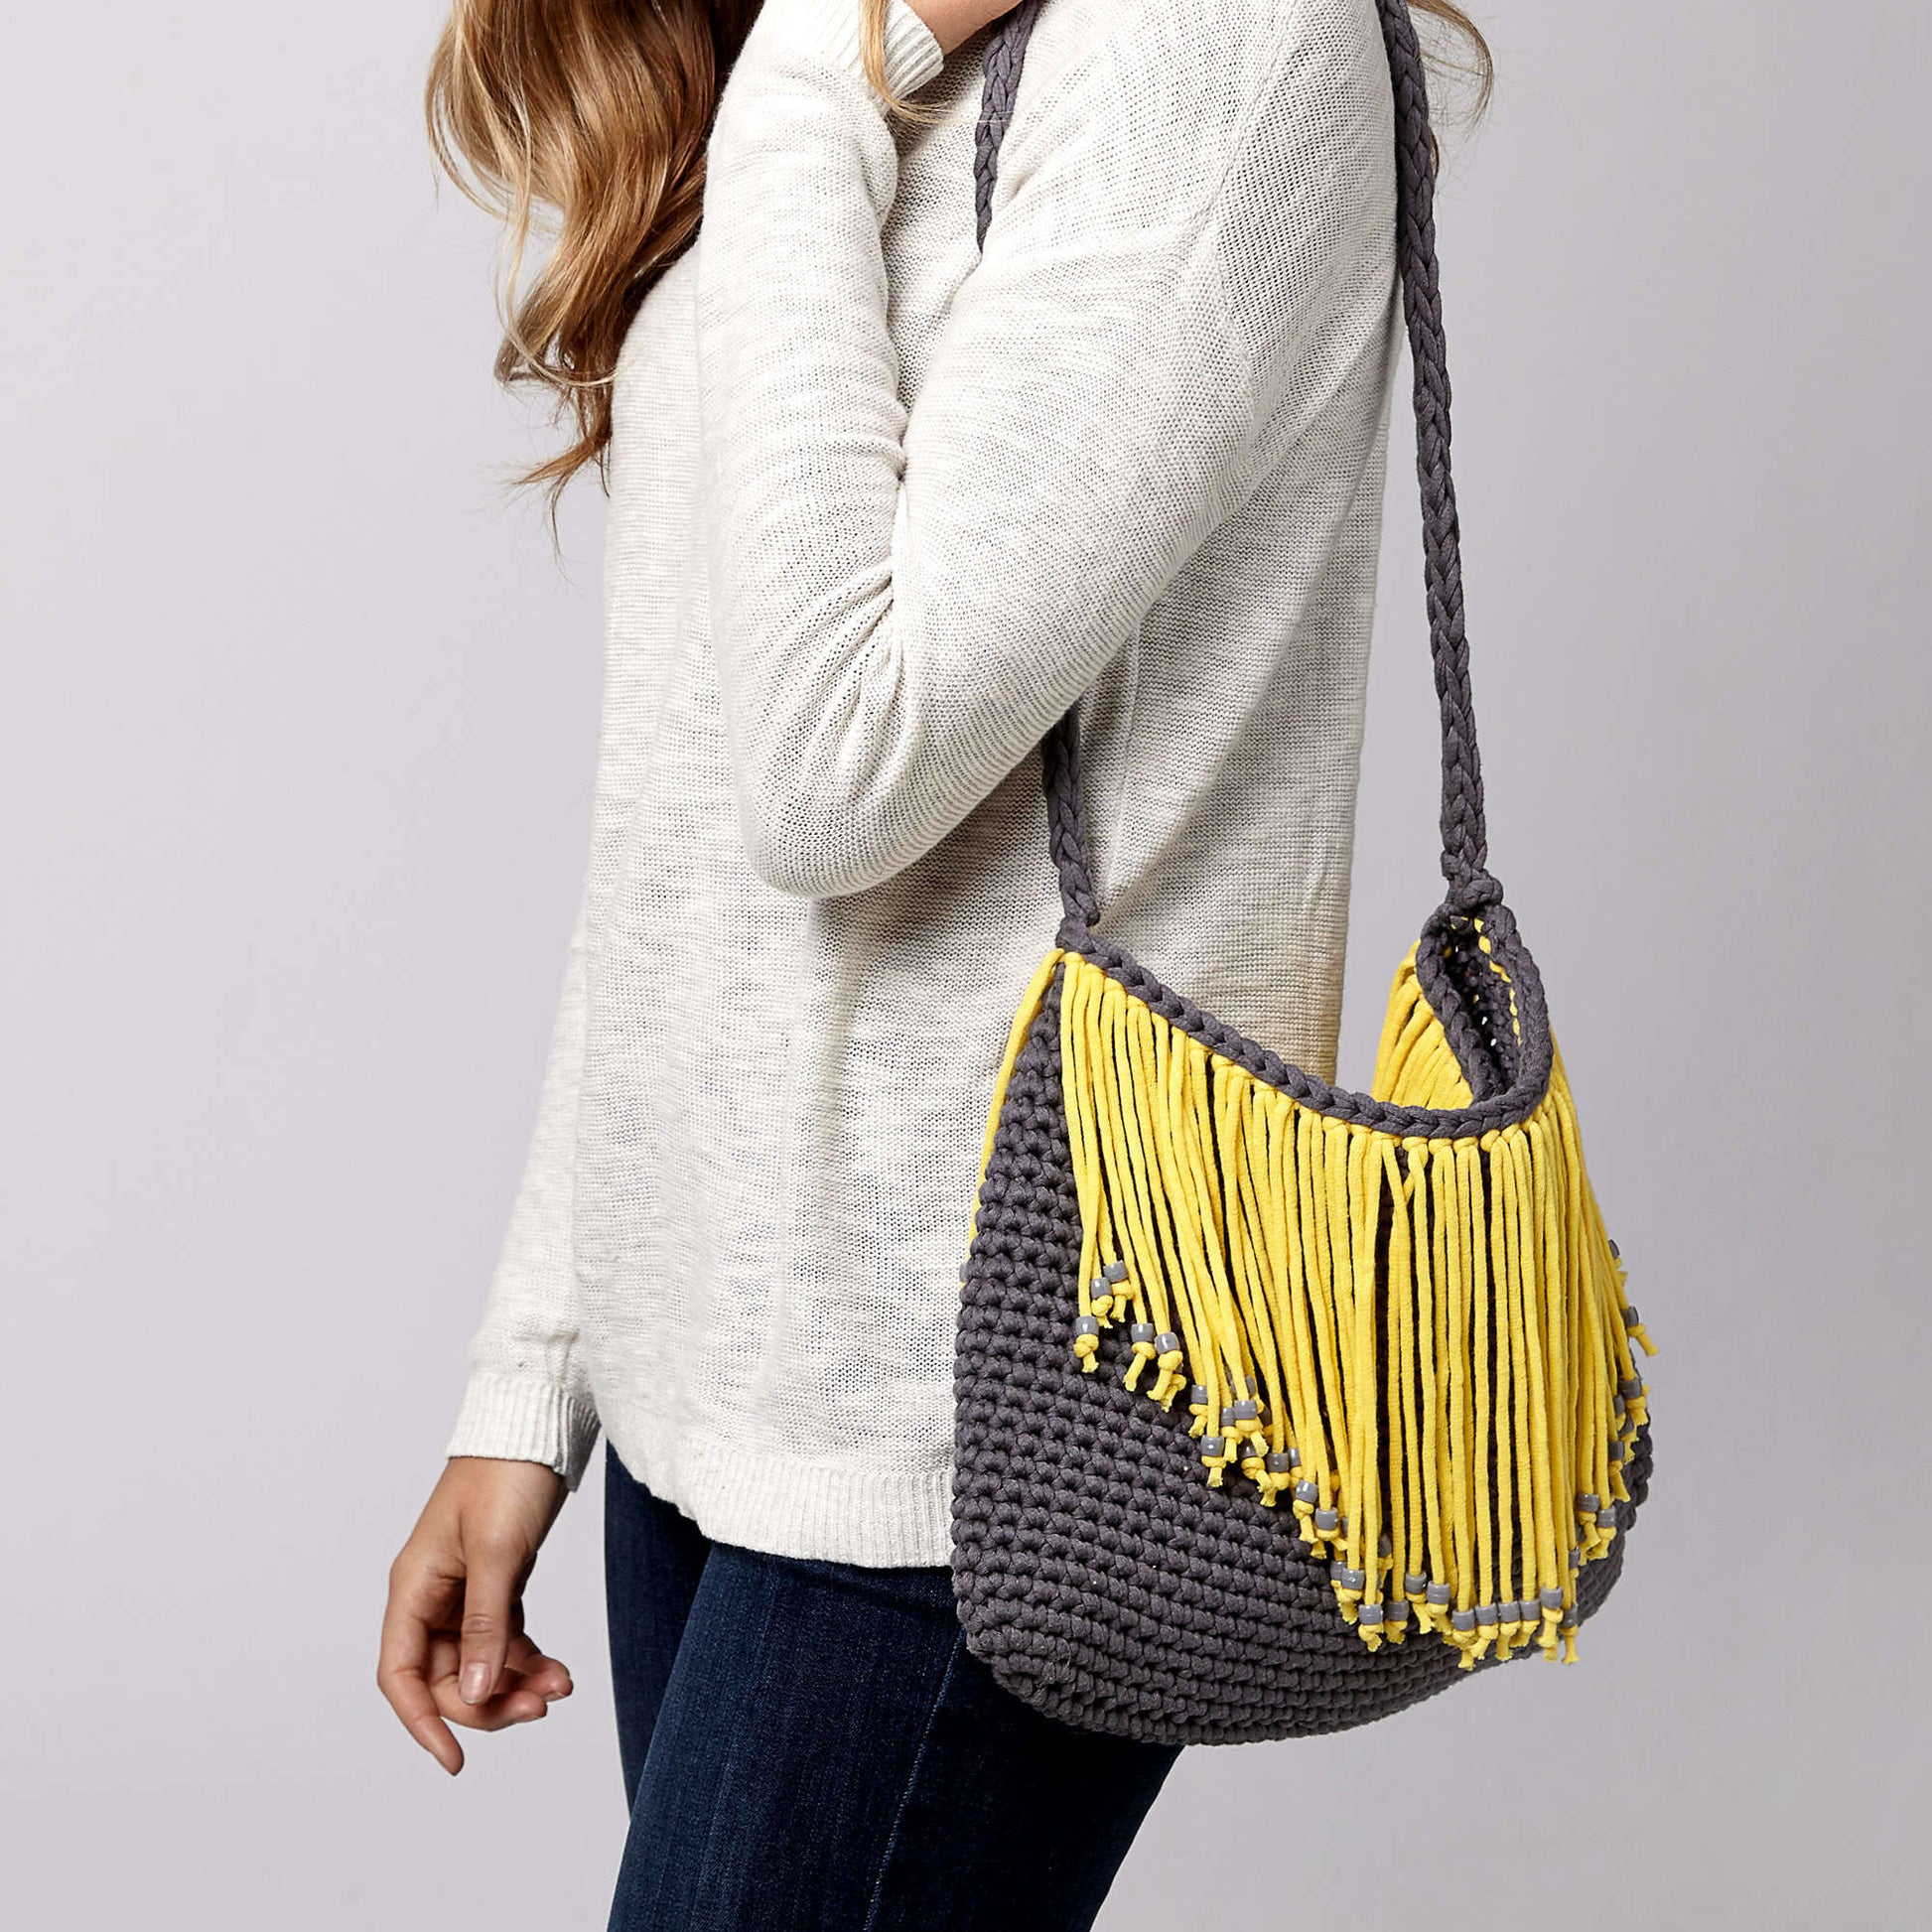 Bernat Fringe Benefits Bag Crochet Accessory made in Bernat Maker Fashion yarn